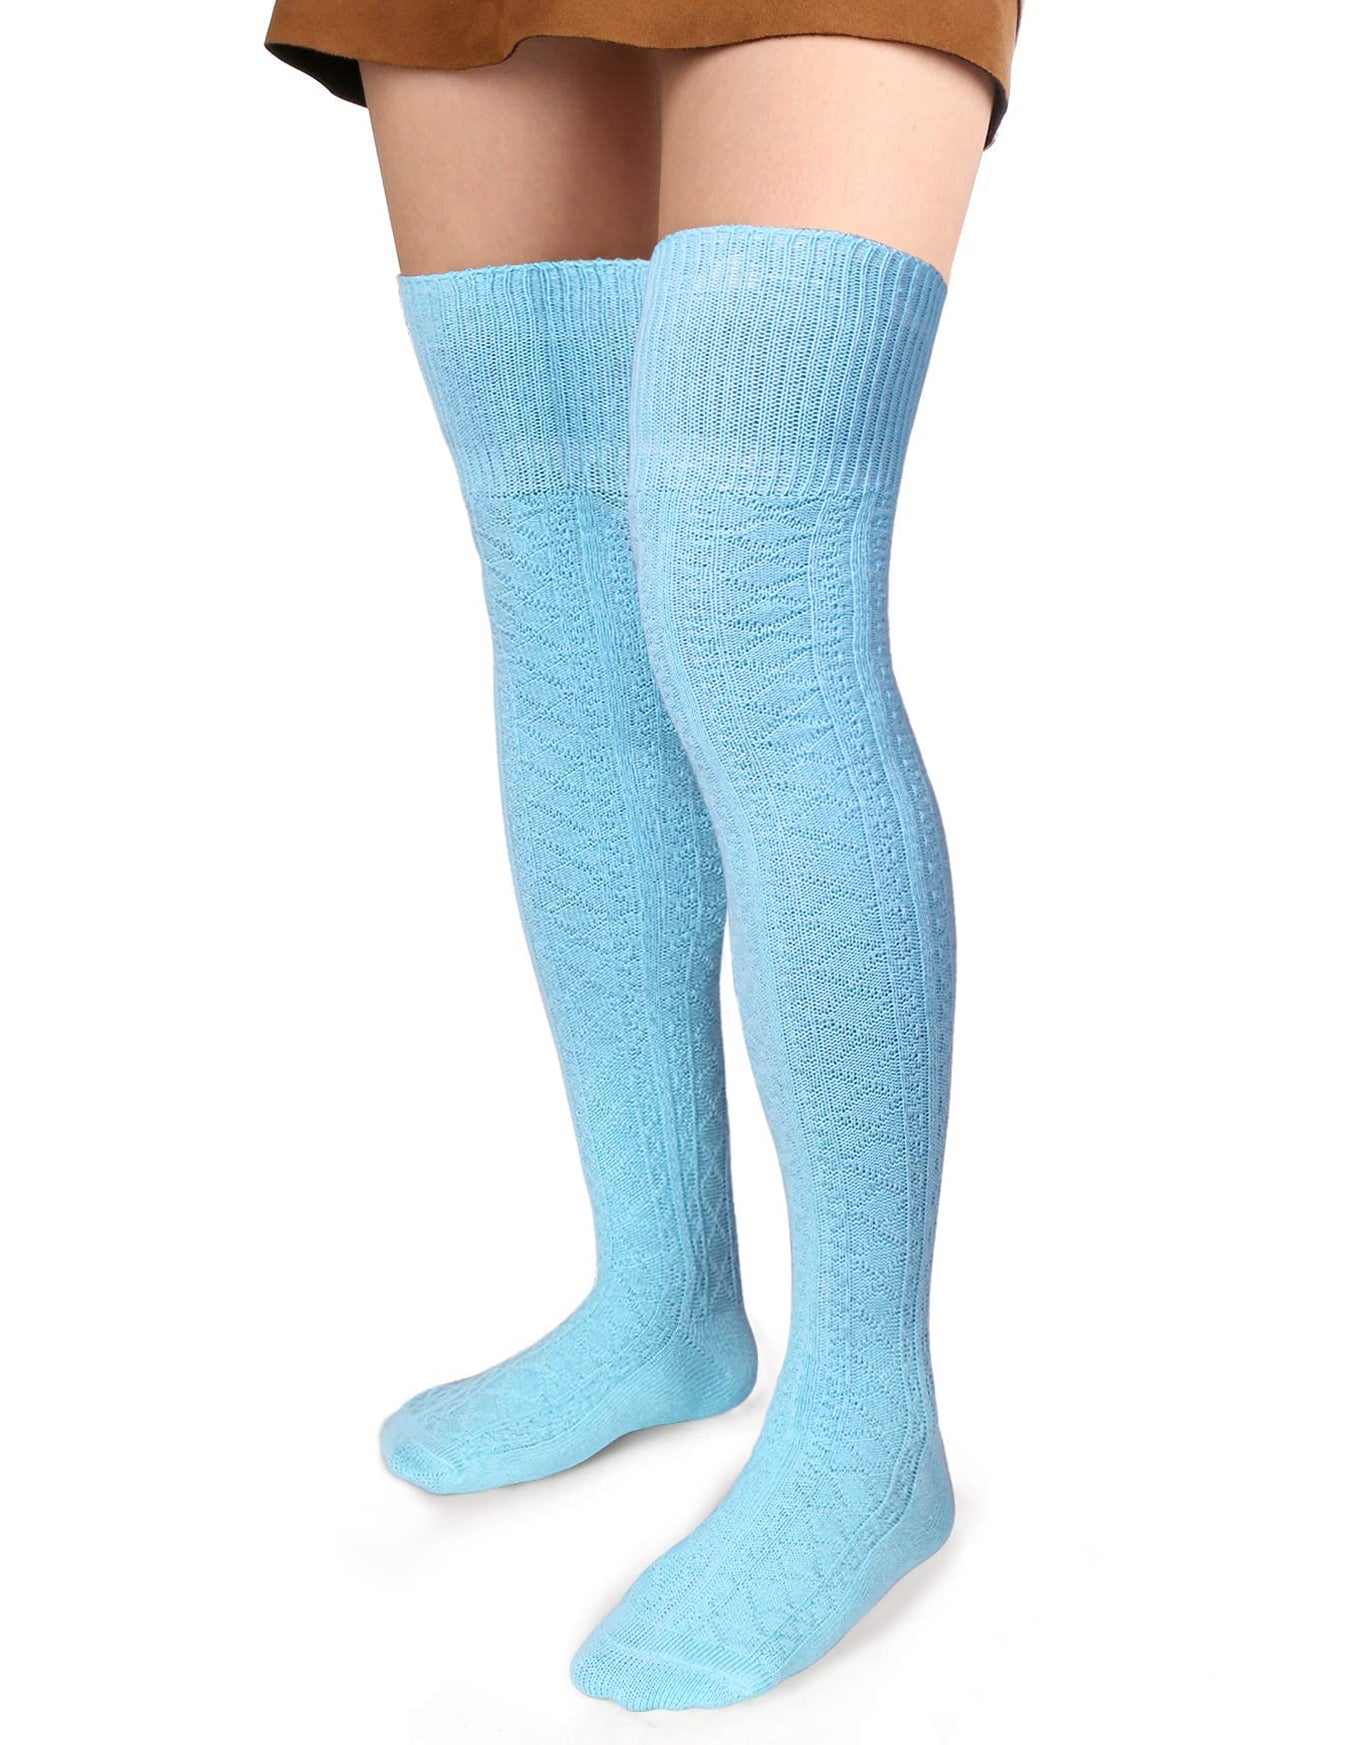 Thigh High Socks Boot Sock Women-Baby Blue丨Moon Wood